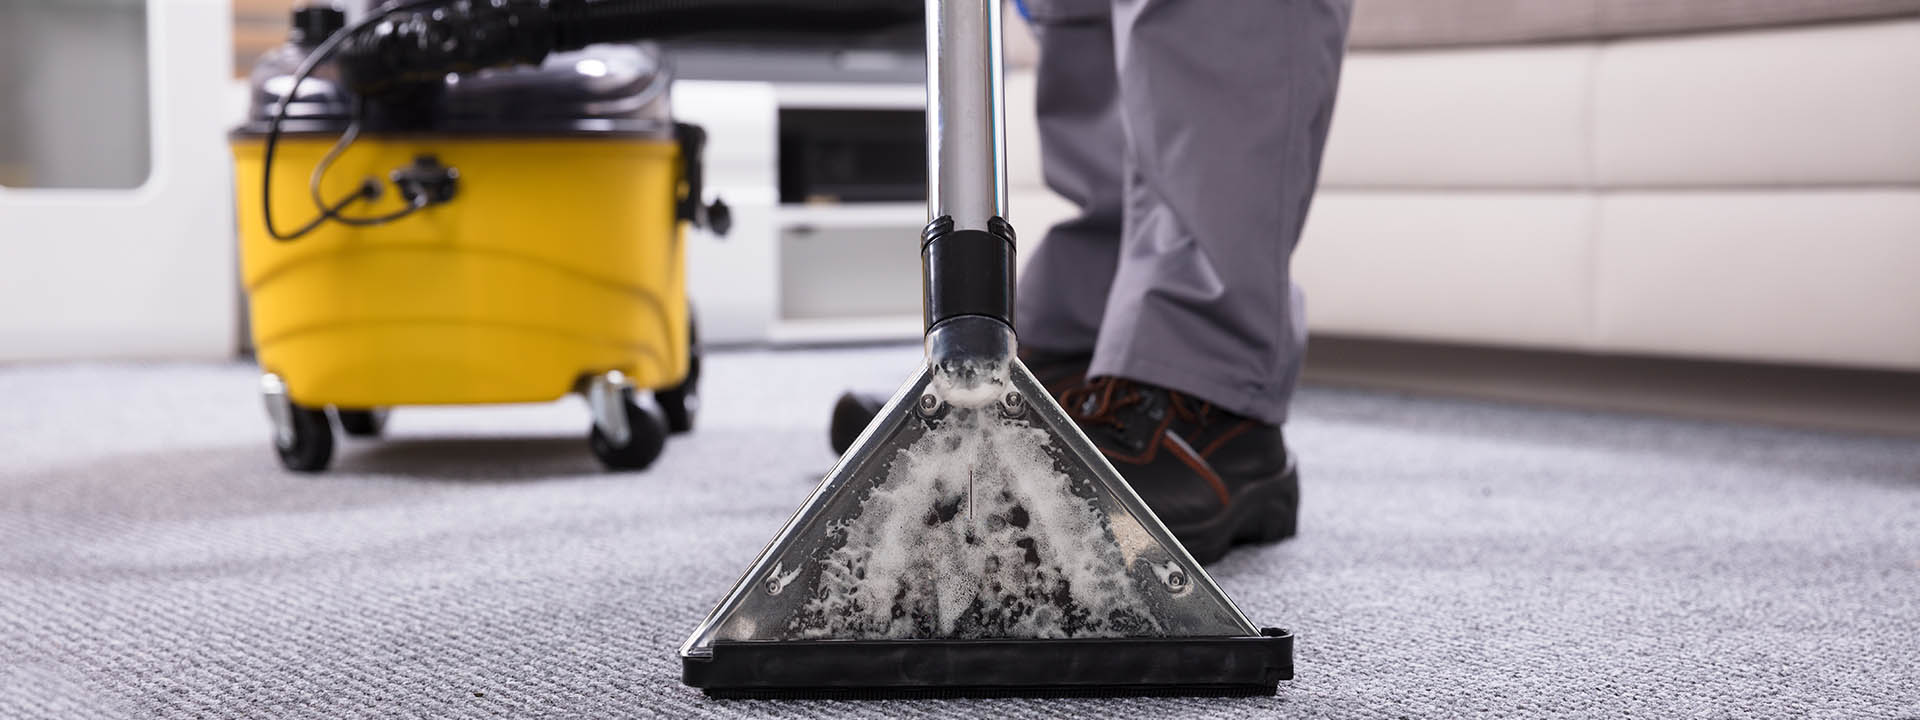 Преимущества чистки ковров в домашних условиях